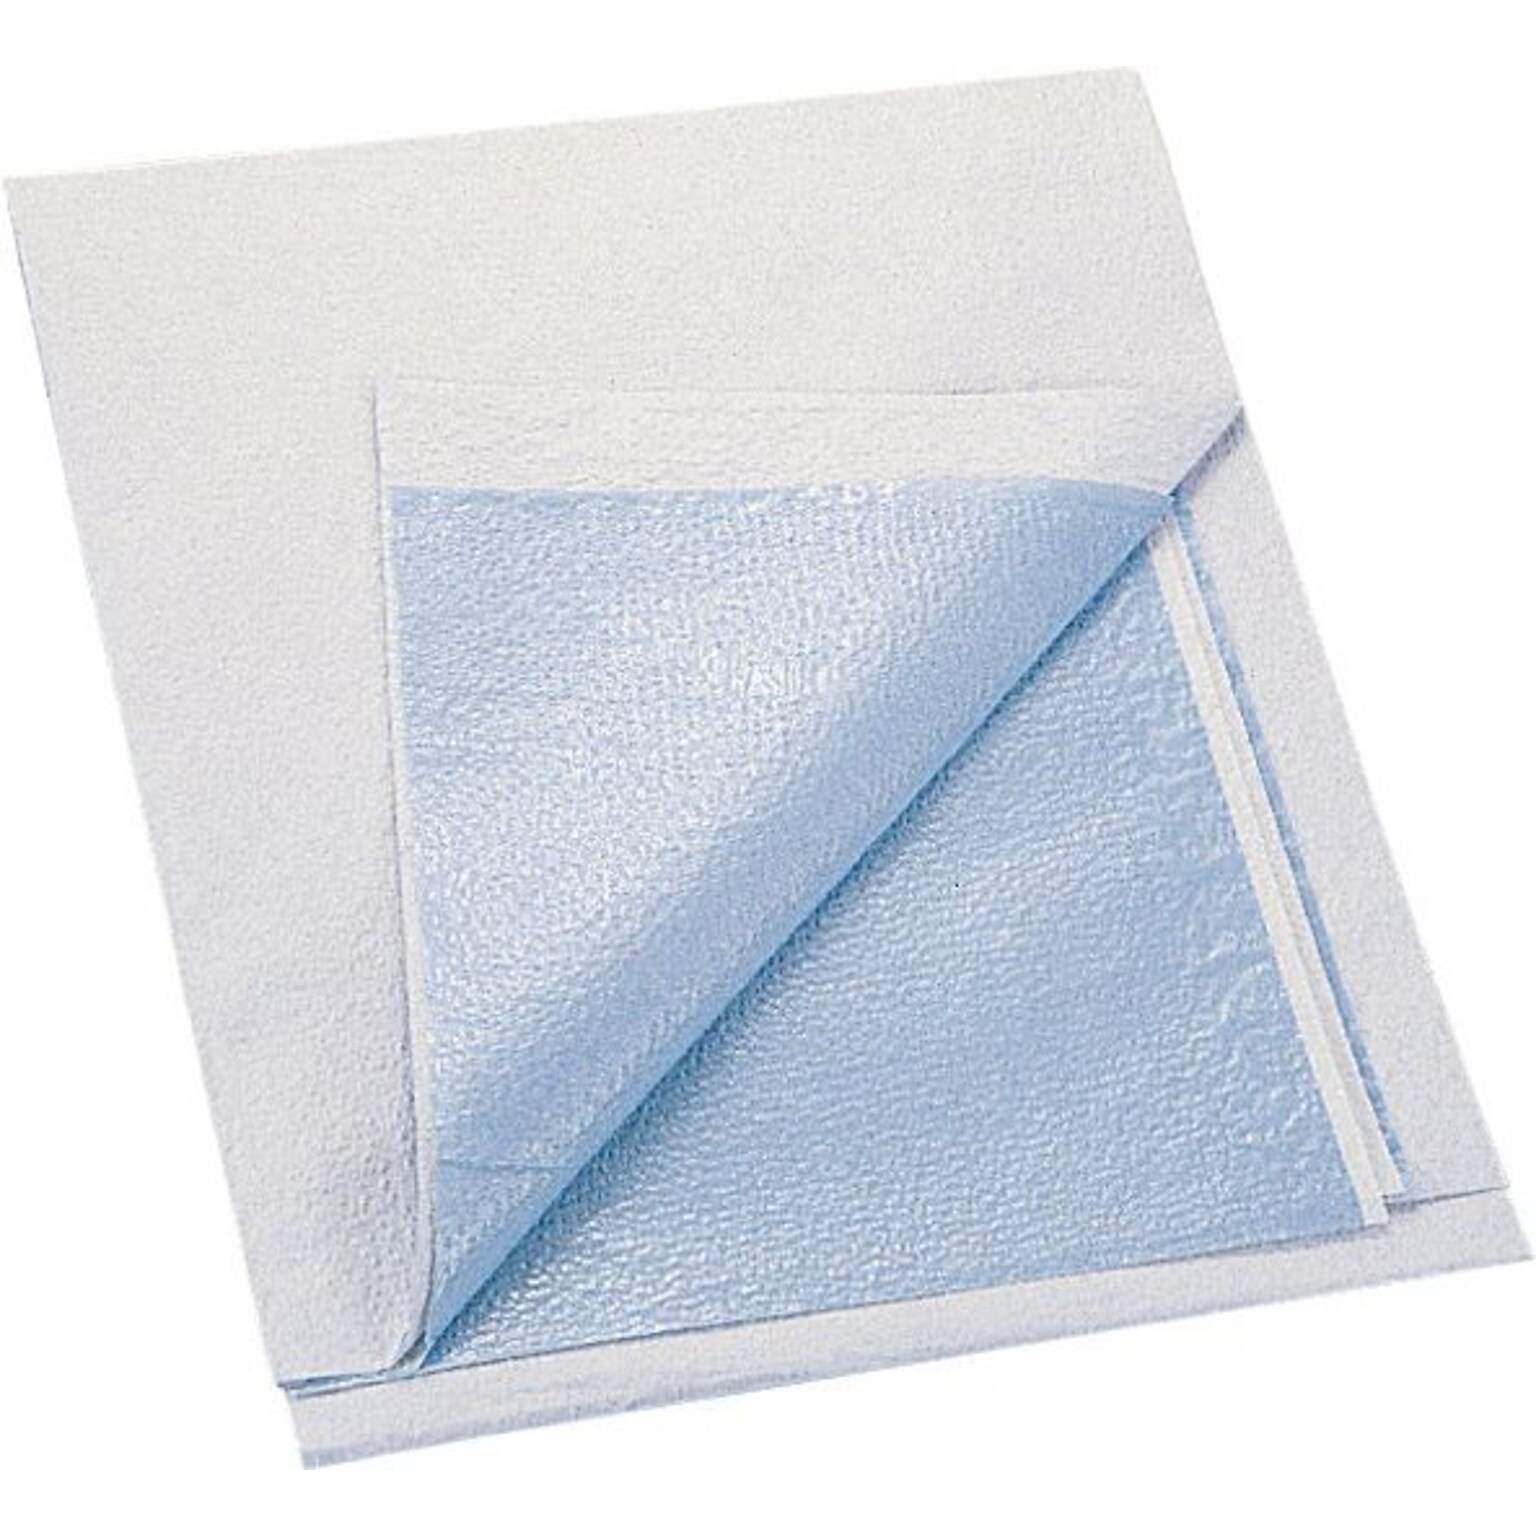 Medline Tissue/Poly Exam Sheets, 40L x 60W, 100/Pack